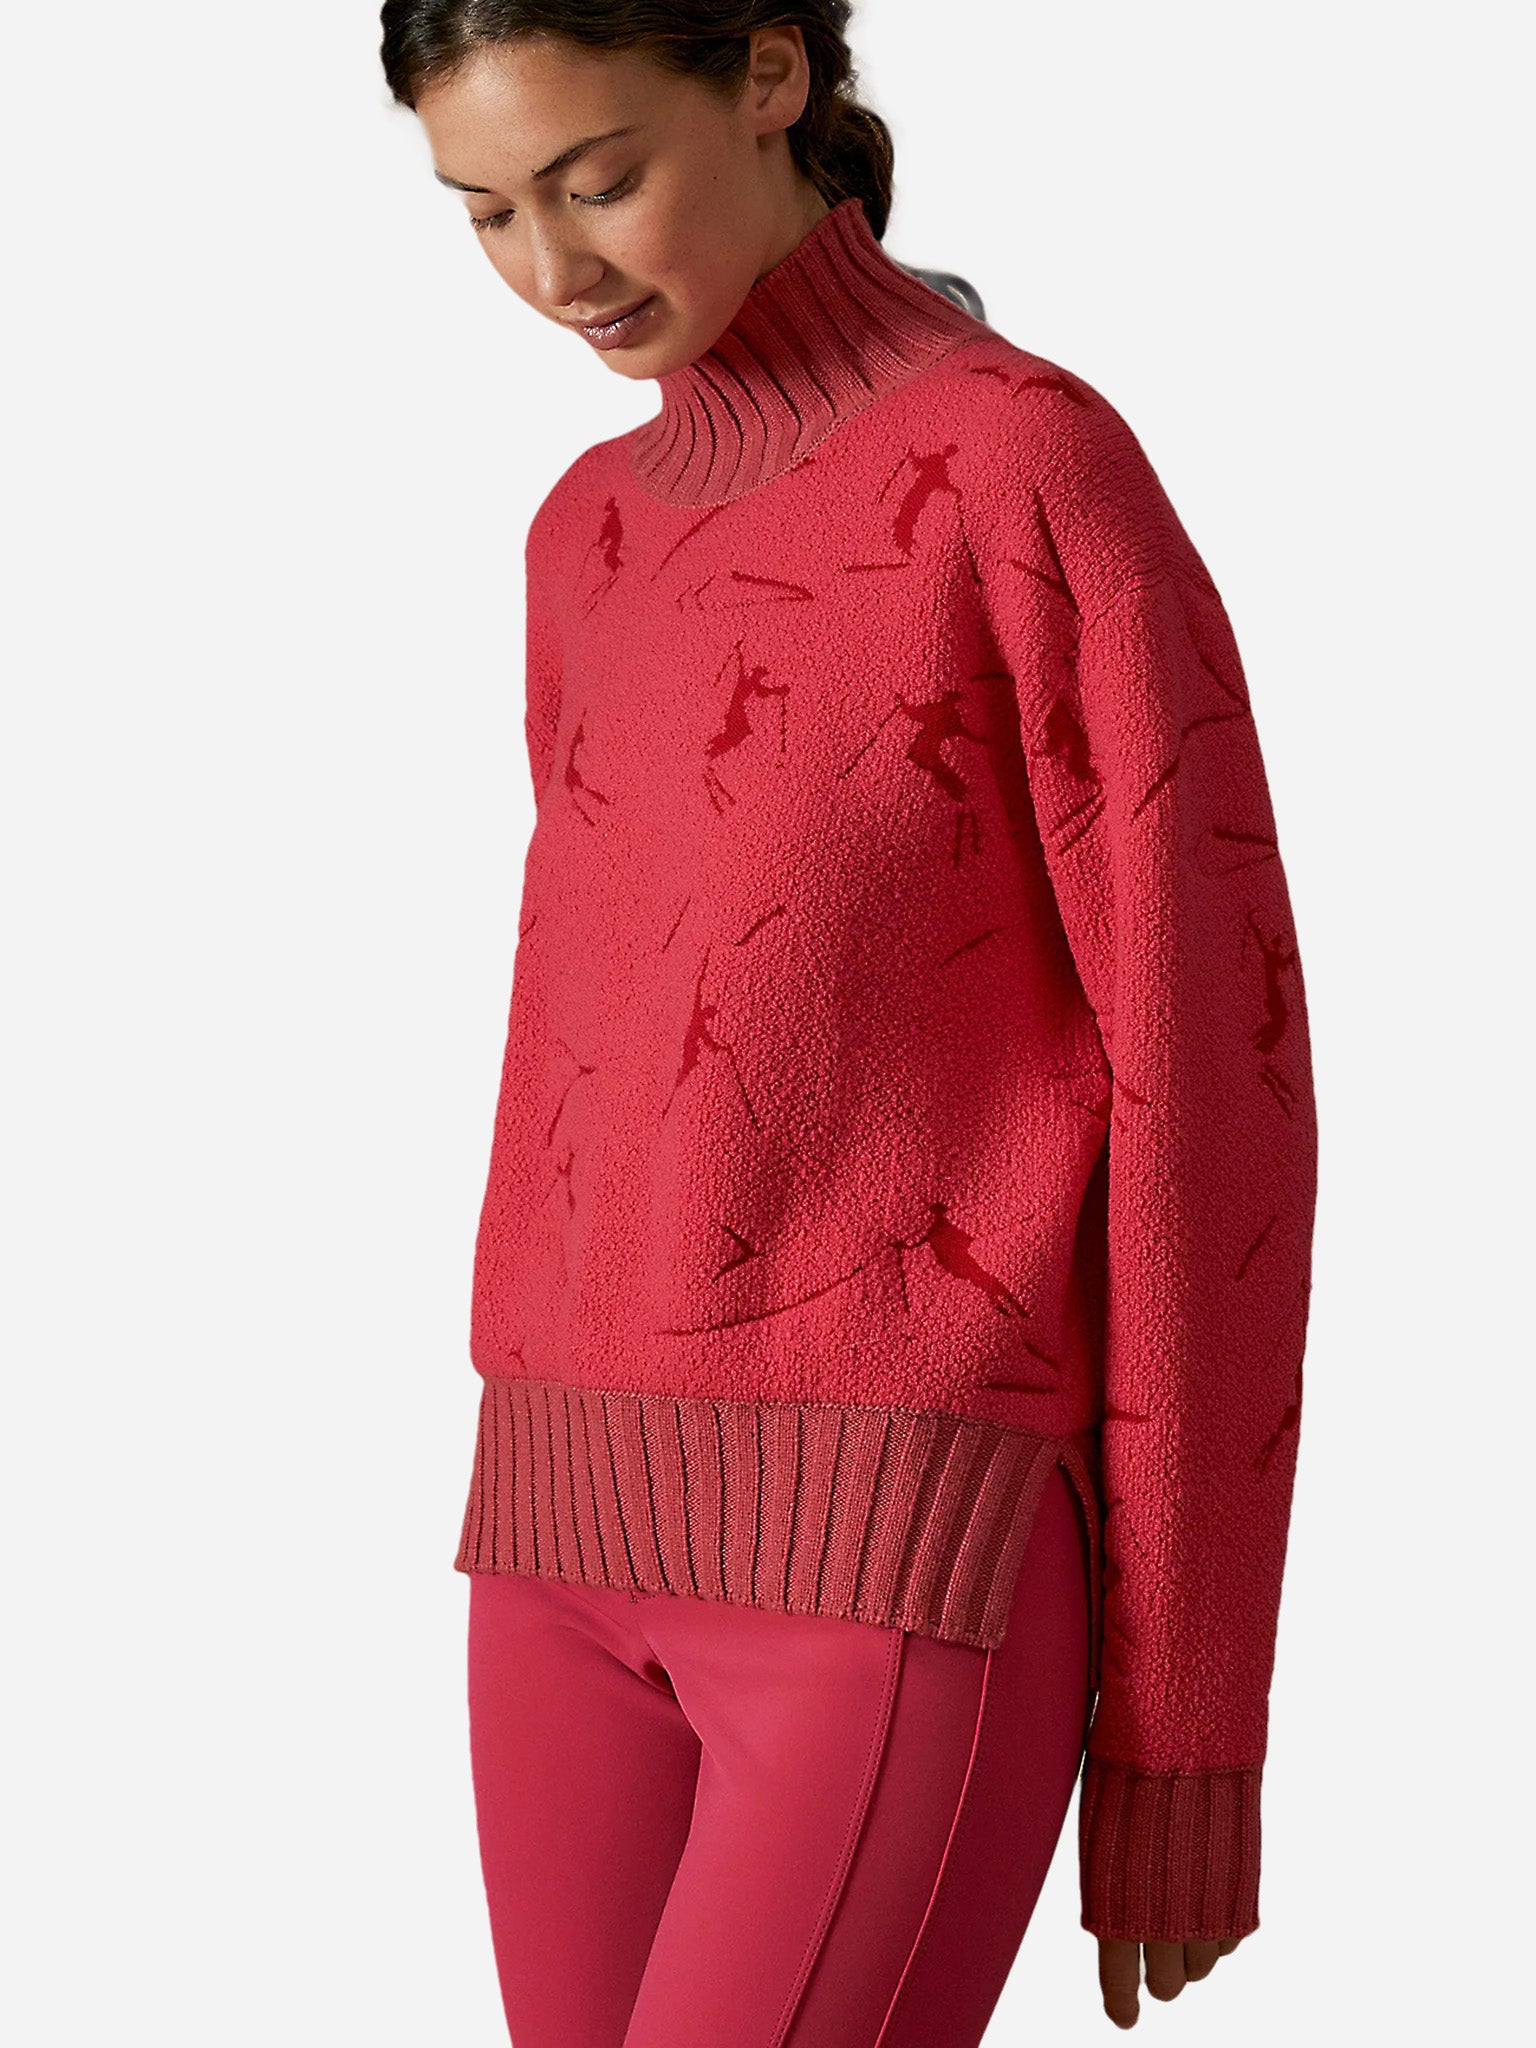 Women's Jacquard Knit Sweater